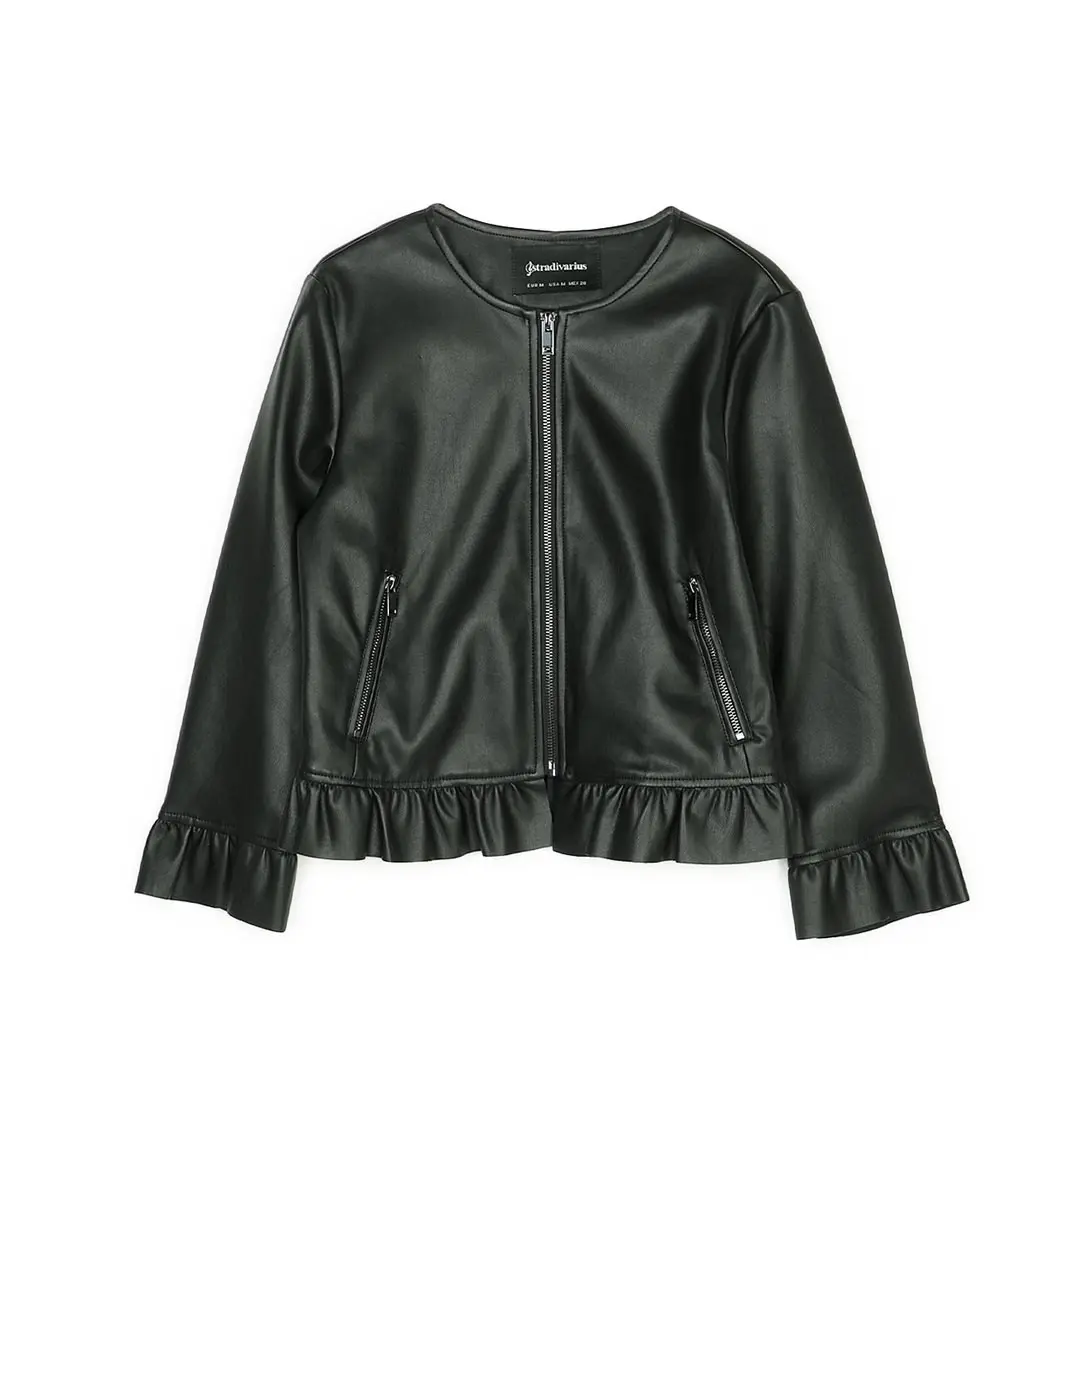 Faux leather jacket with ruffles. (stradivarius.com)